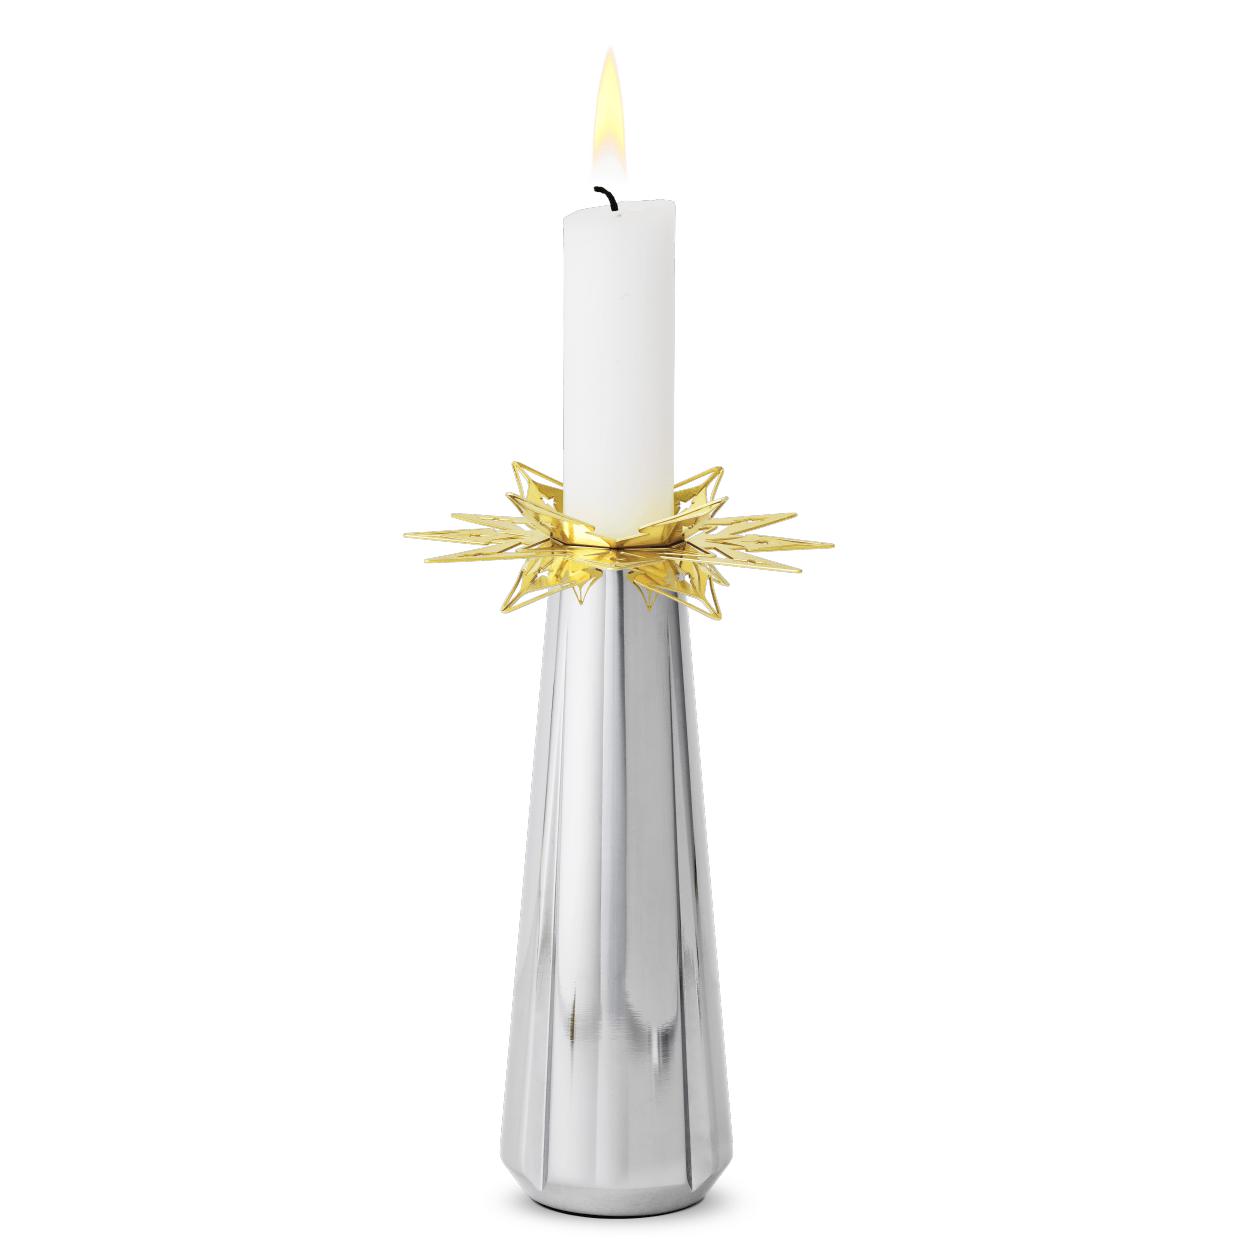 Rosendahl Karen Blixen Candle Cuff Star Gold udbredt 2 stk.